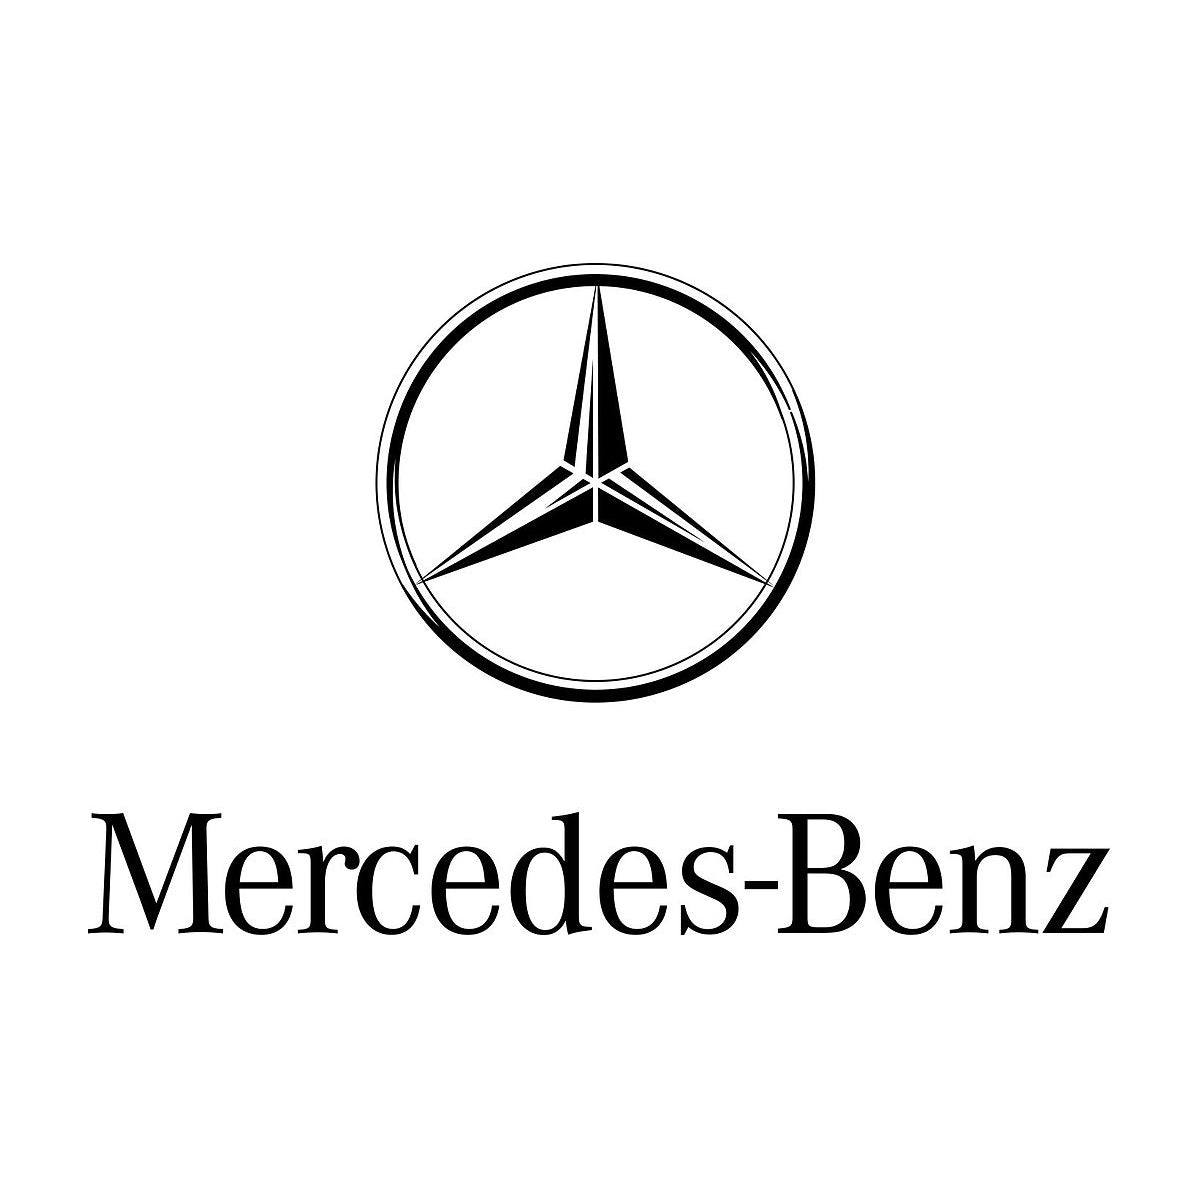 Mercedes Benz Club Black 3.4 oz Eau De Toilette and 20 ml Mini Travel Spray  2 Piece Gift Set 